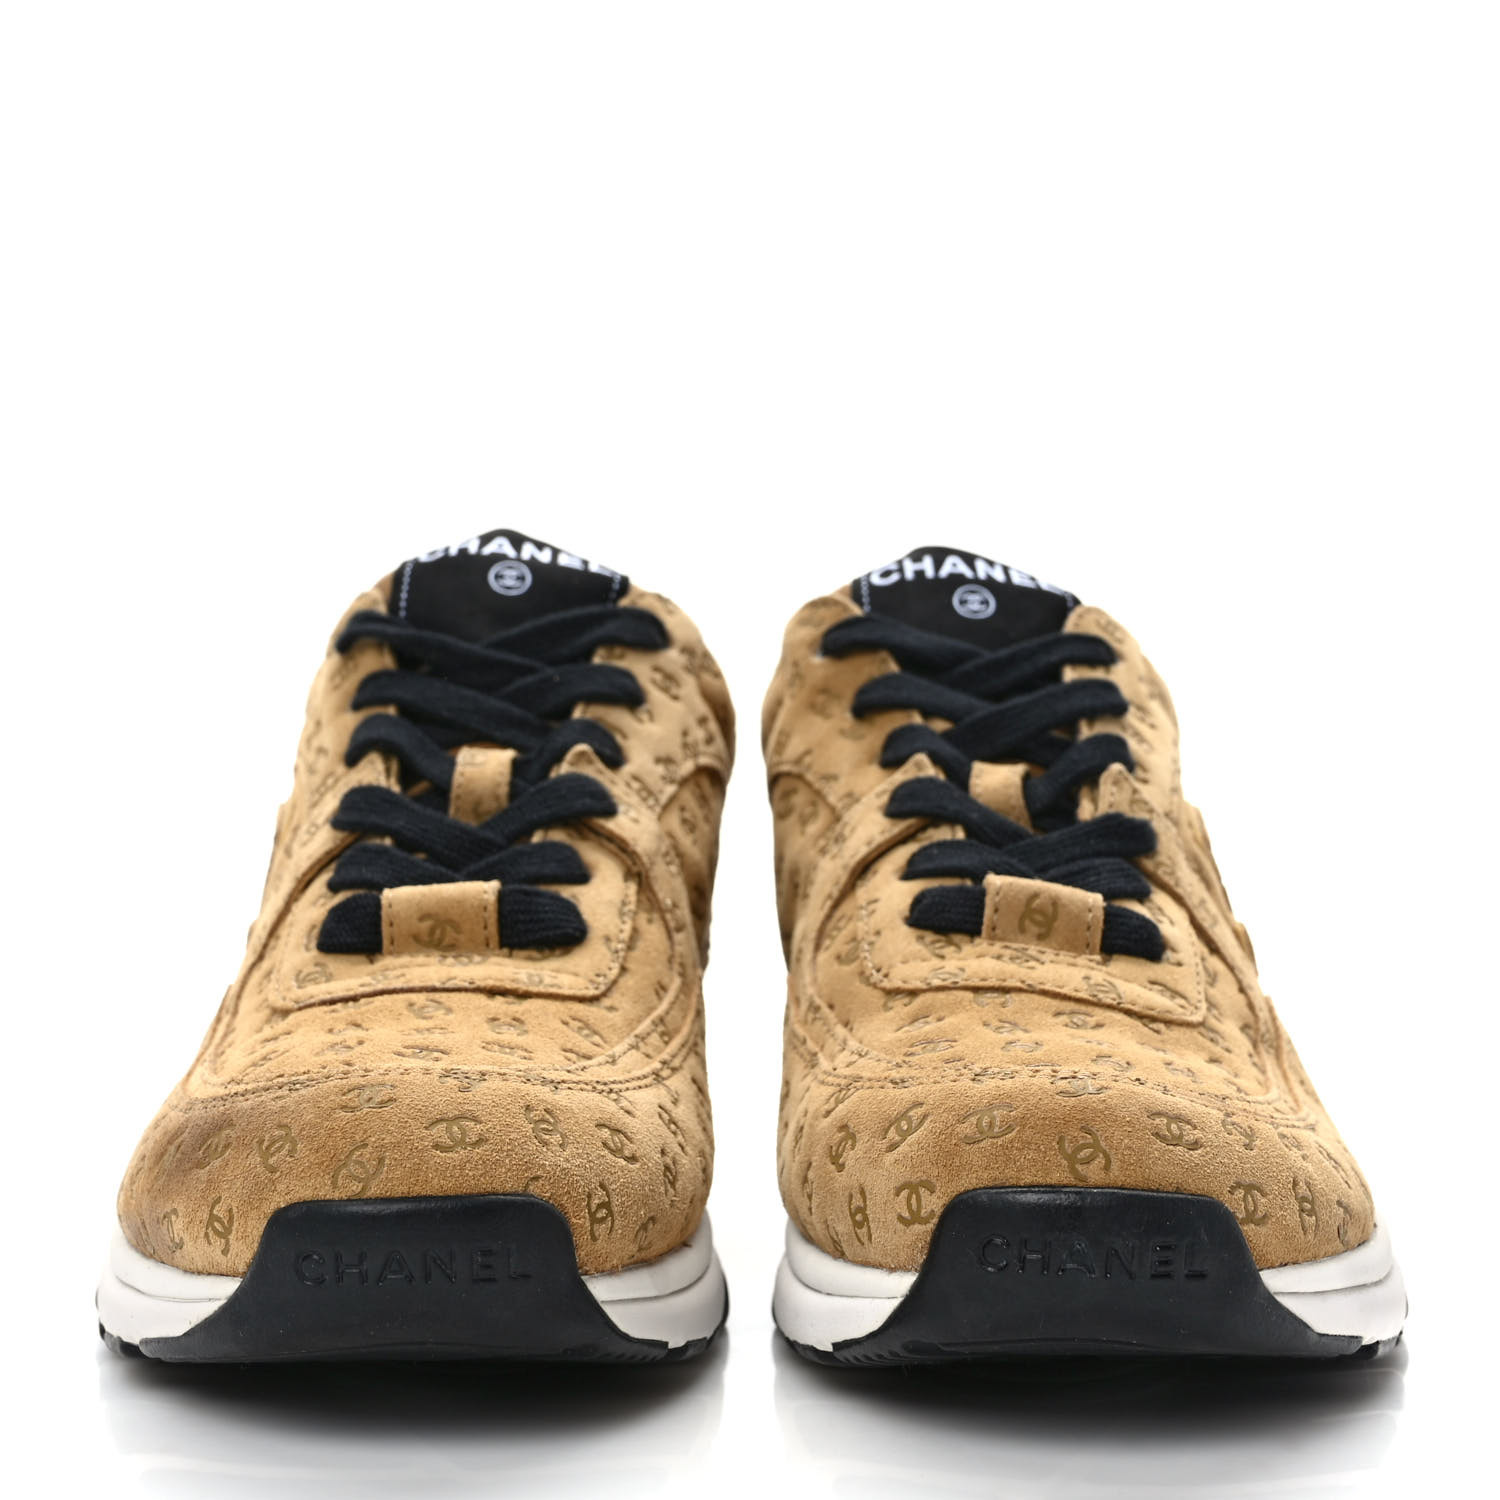 CHANEL Nylon Suede Calfskin Printed CC Sneakers 39.5 Beige